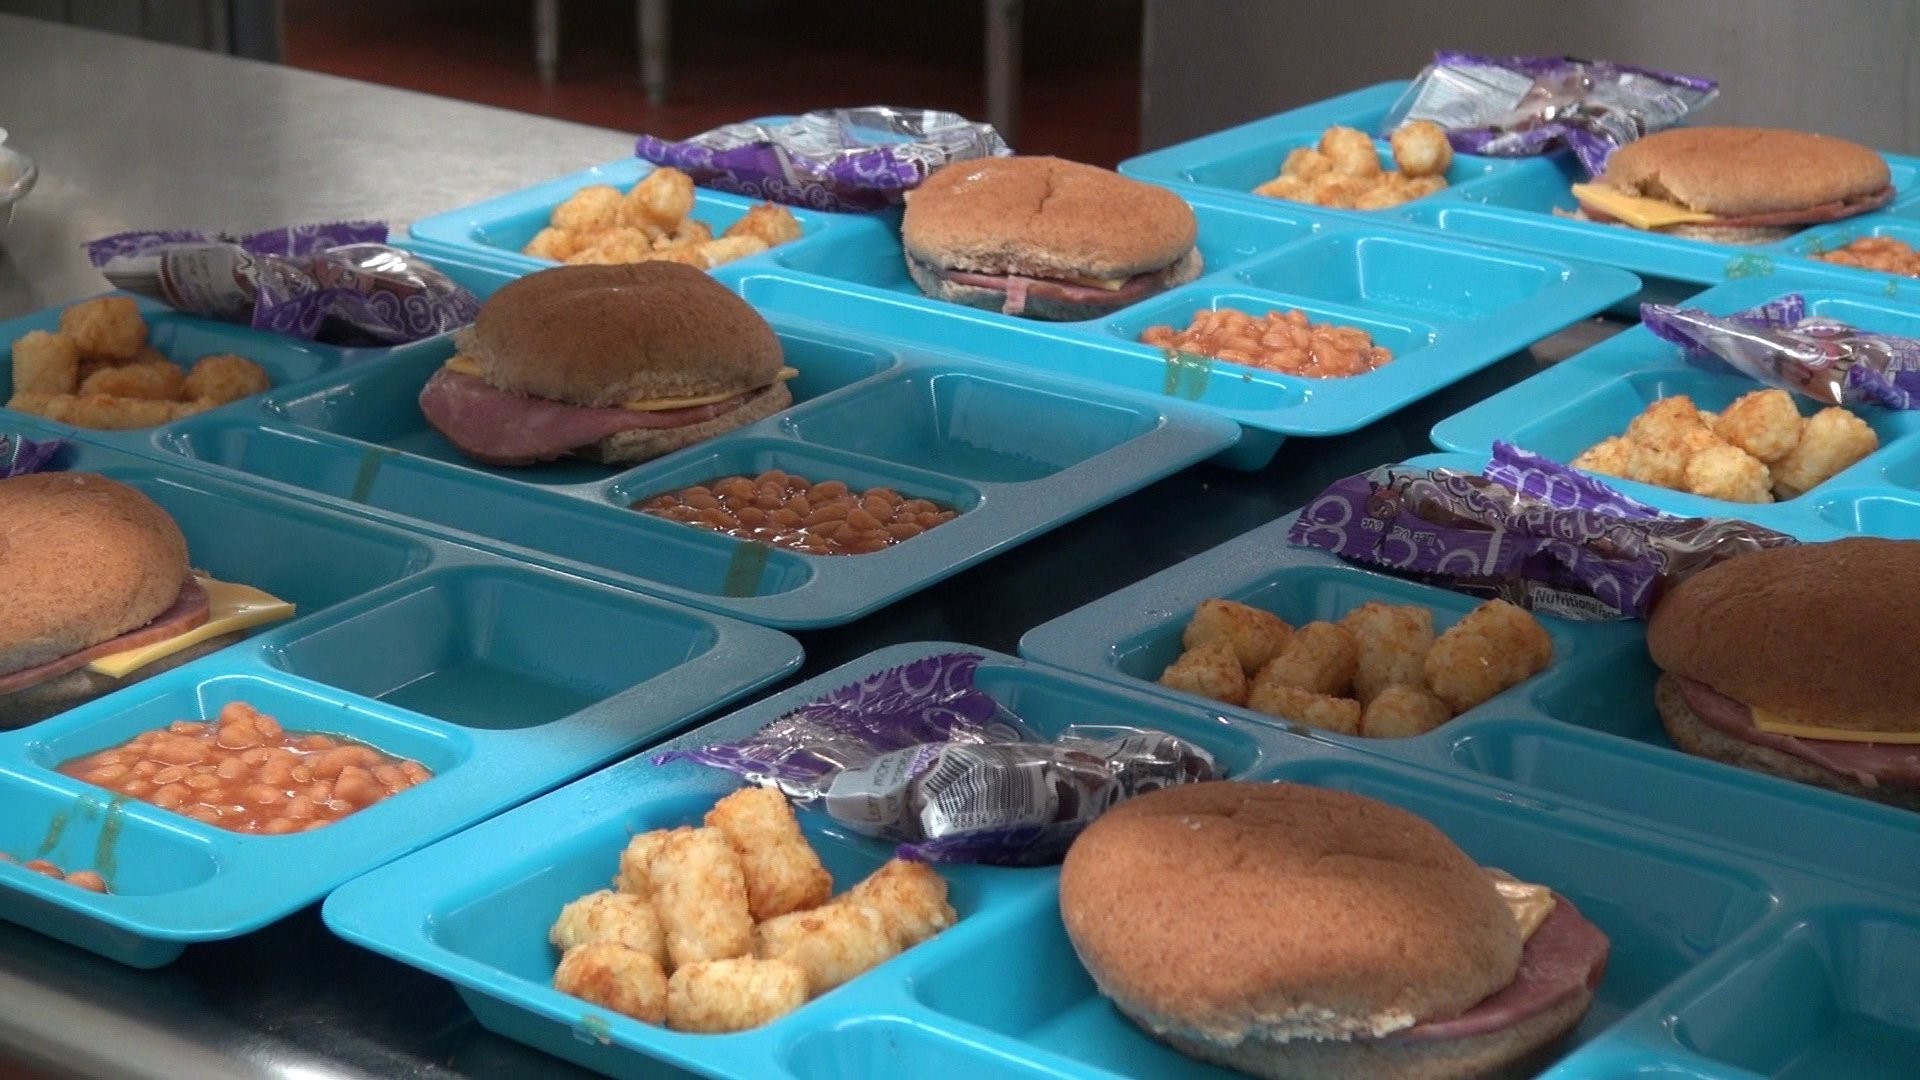 fayetteville-public-schools-expands-summer-lunch-program-5newsonline